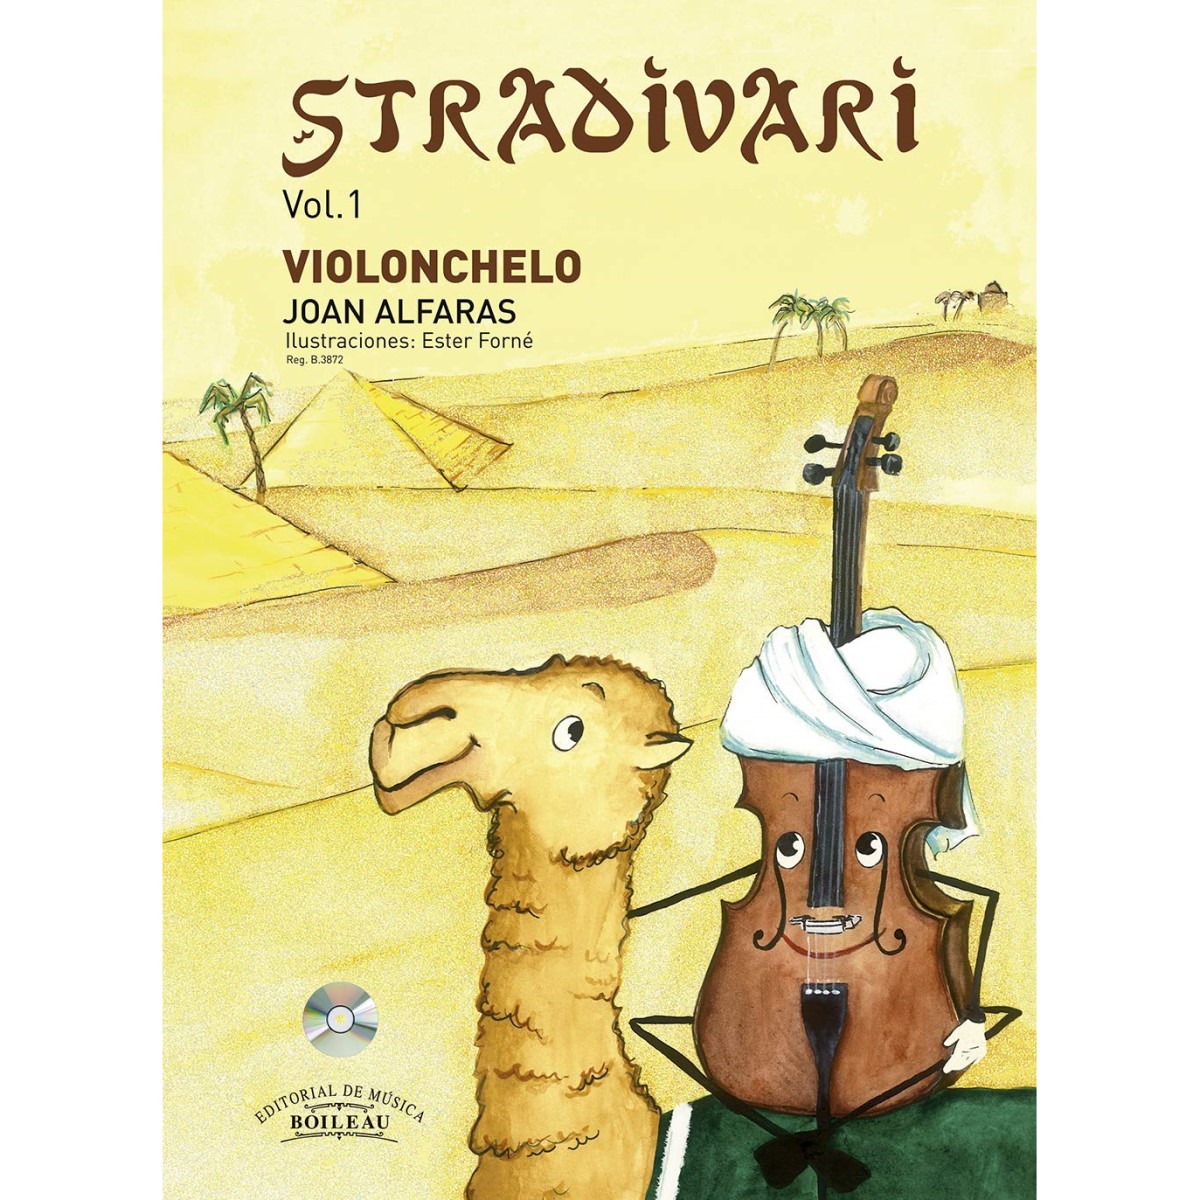 comprar stradivaro volumen 1 violonchelo mejor precio prieto musica jerez